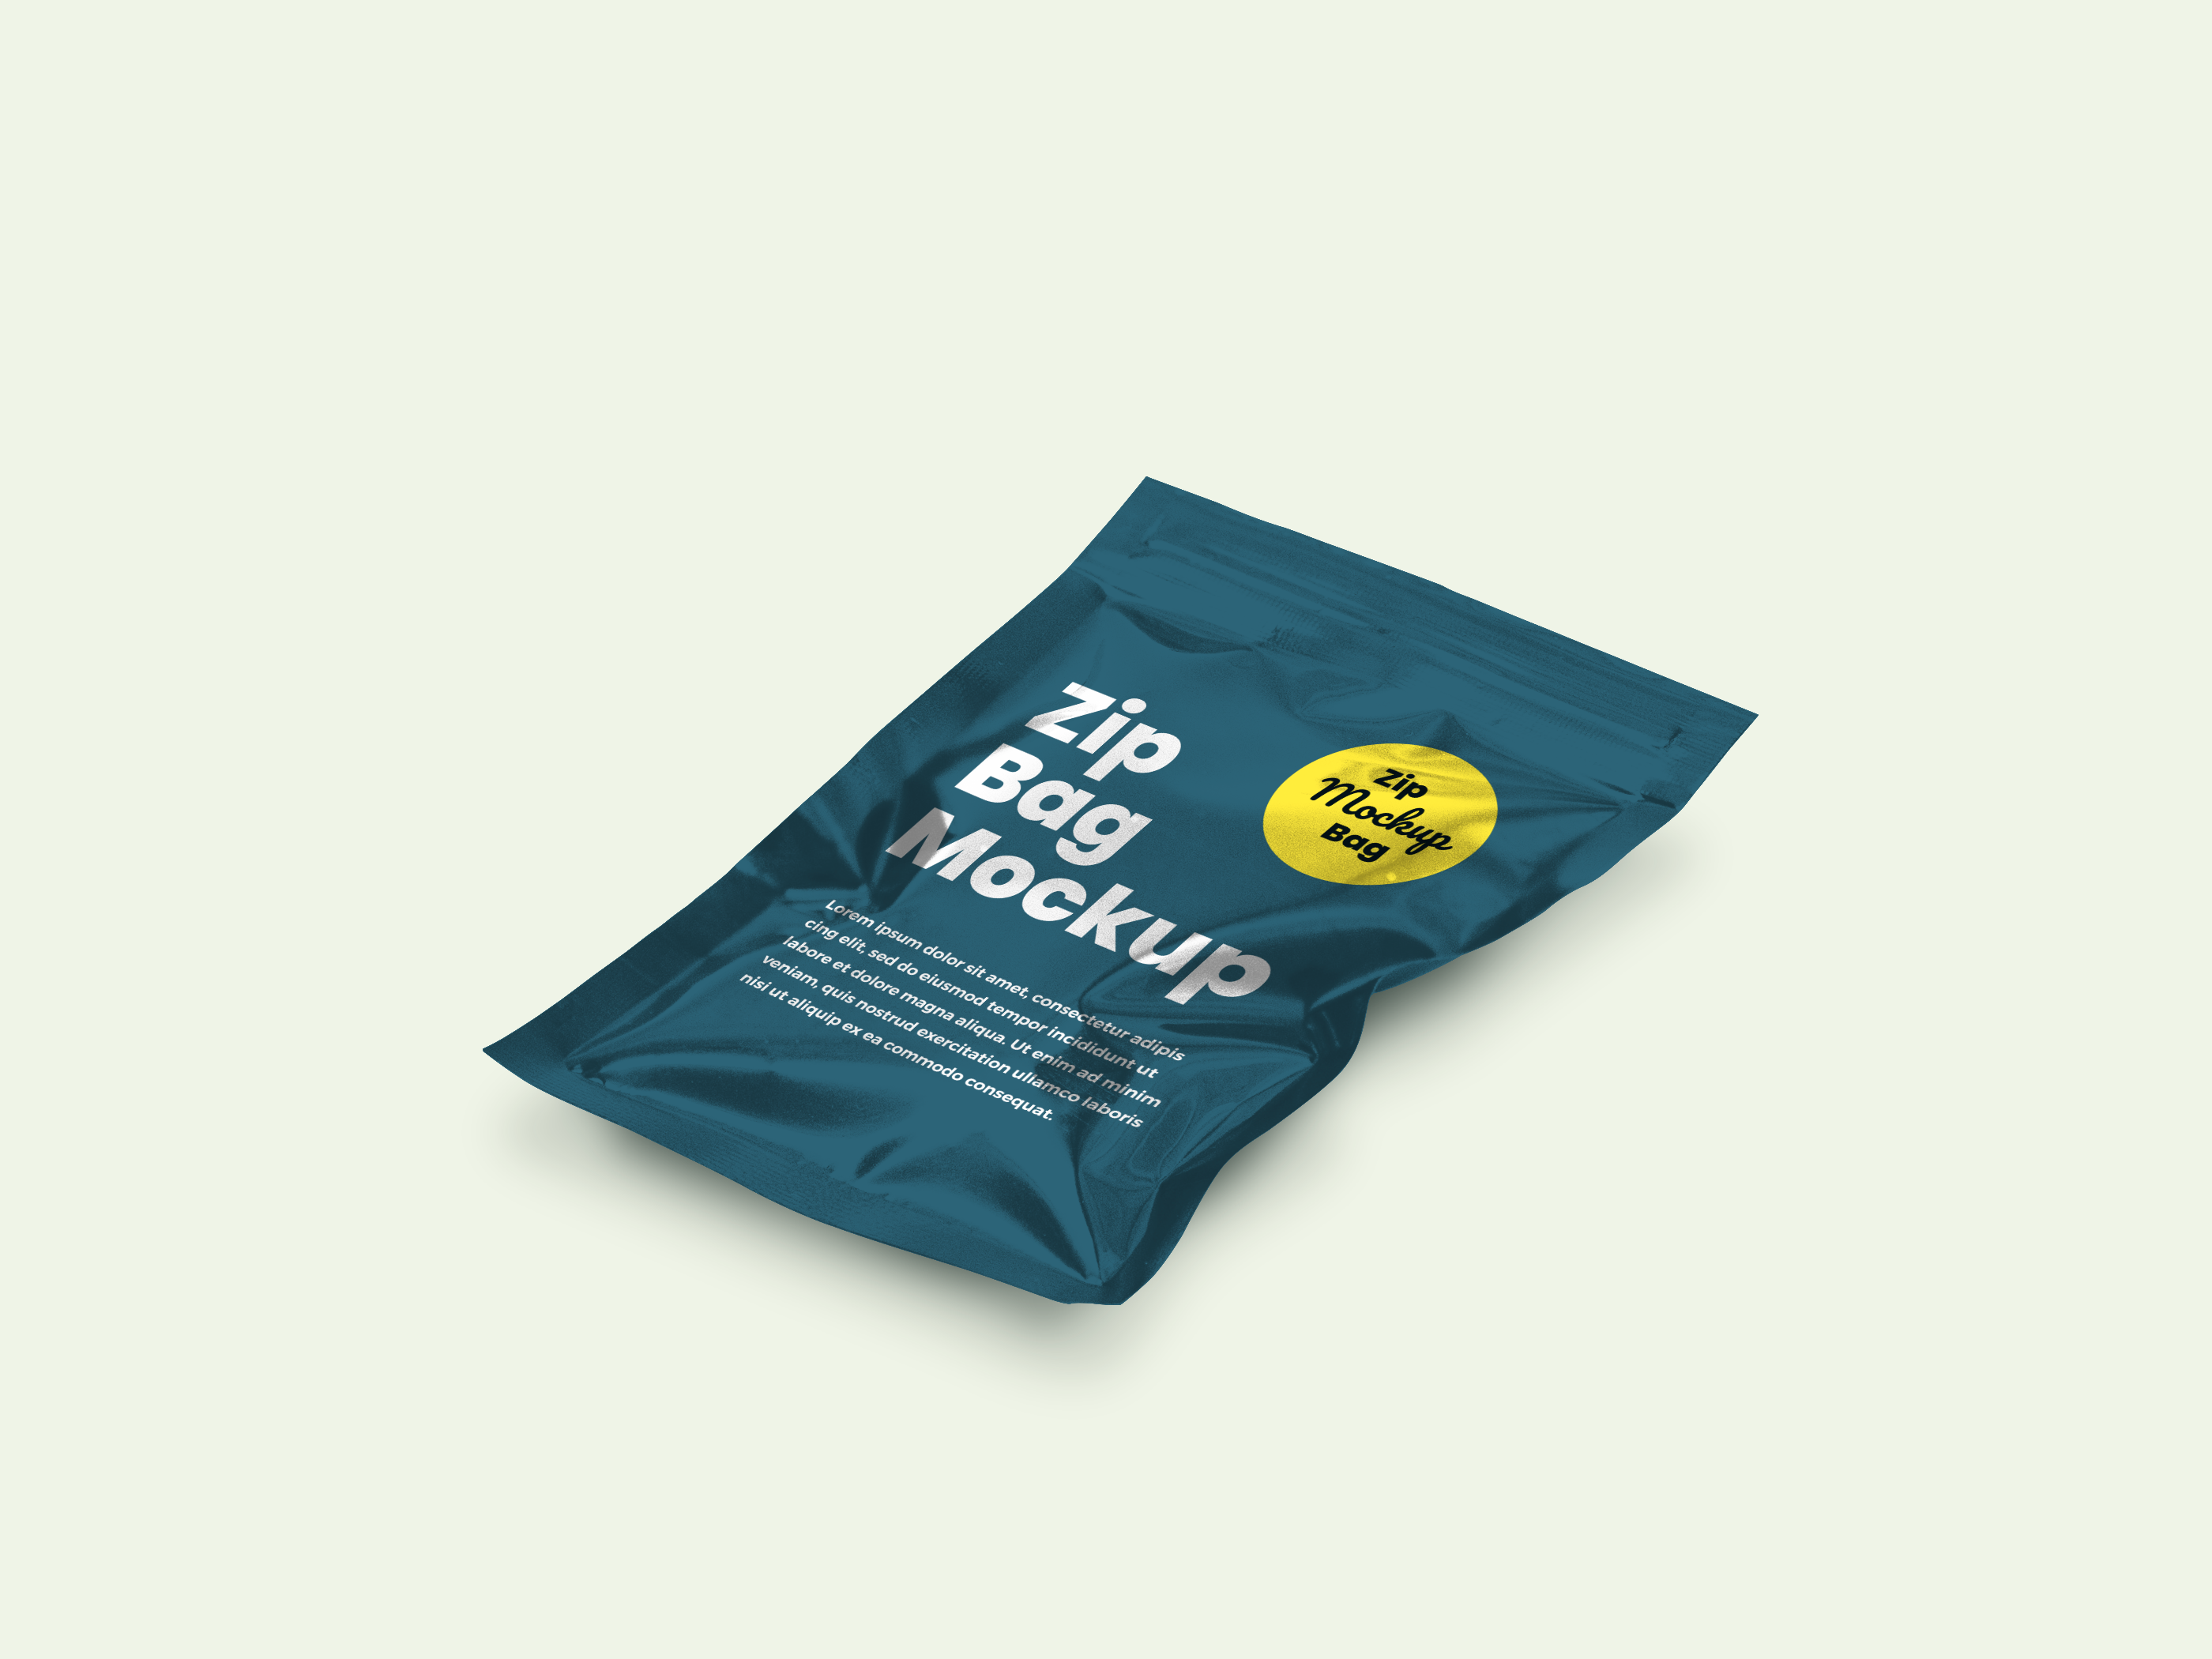 Download Zip Bag Package Mockup - Free Download